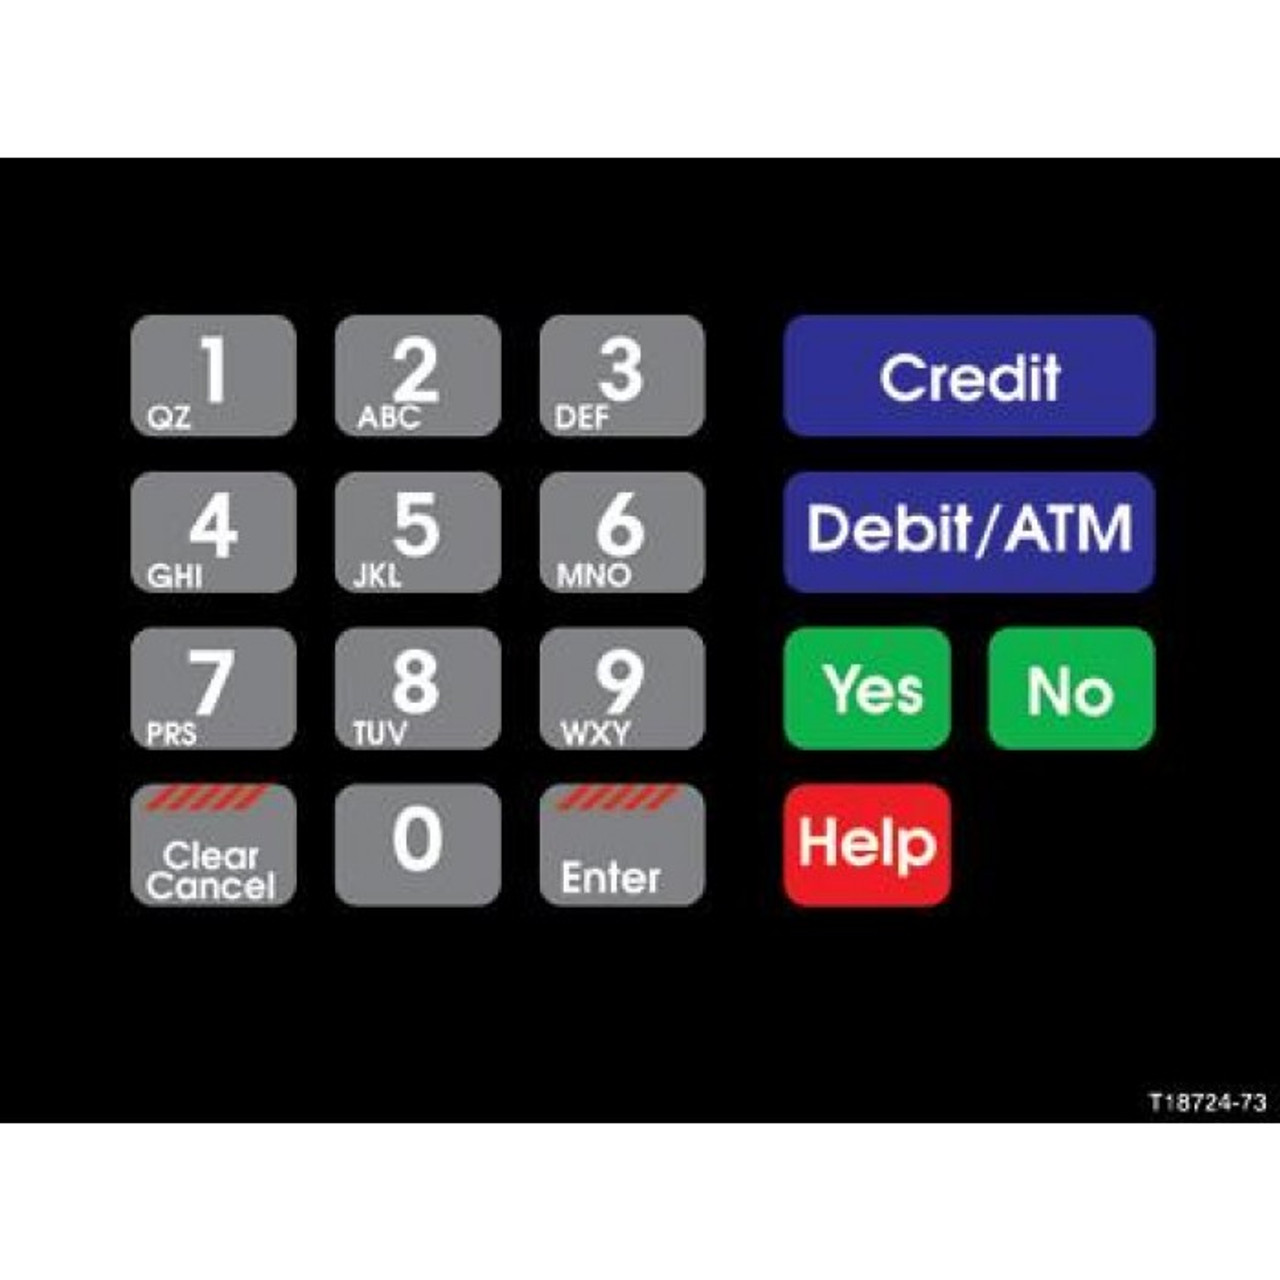 T18724-73 - Mobil Crind Keypad Overlay